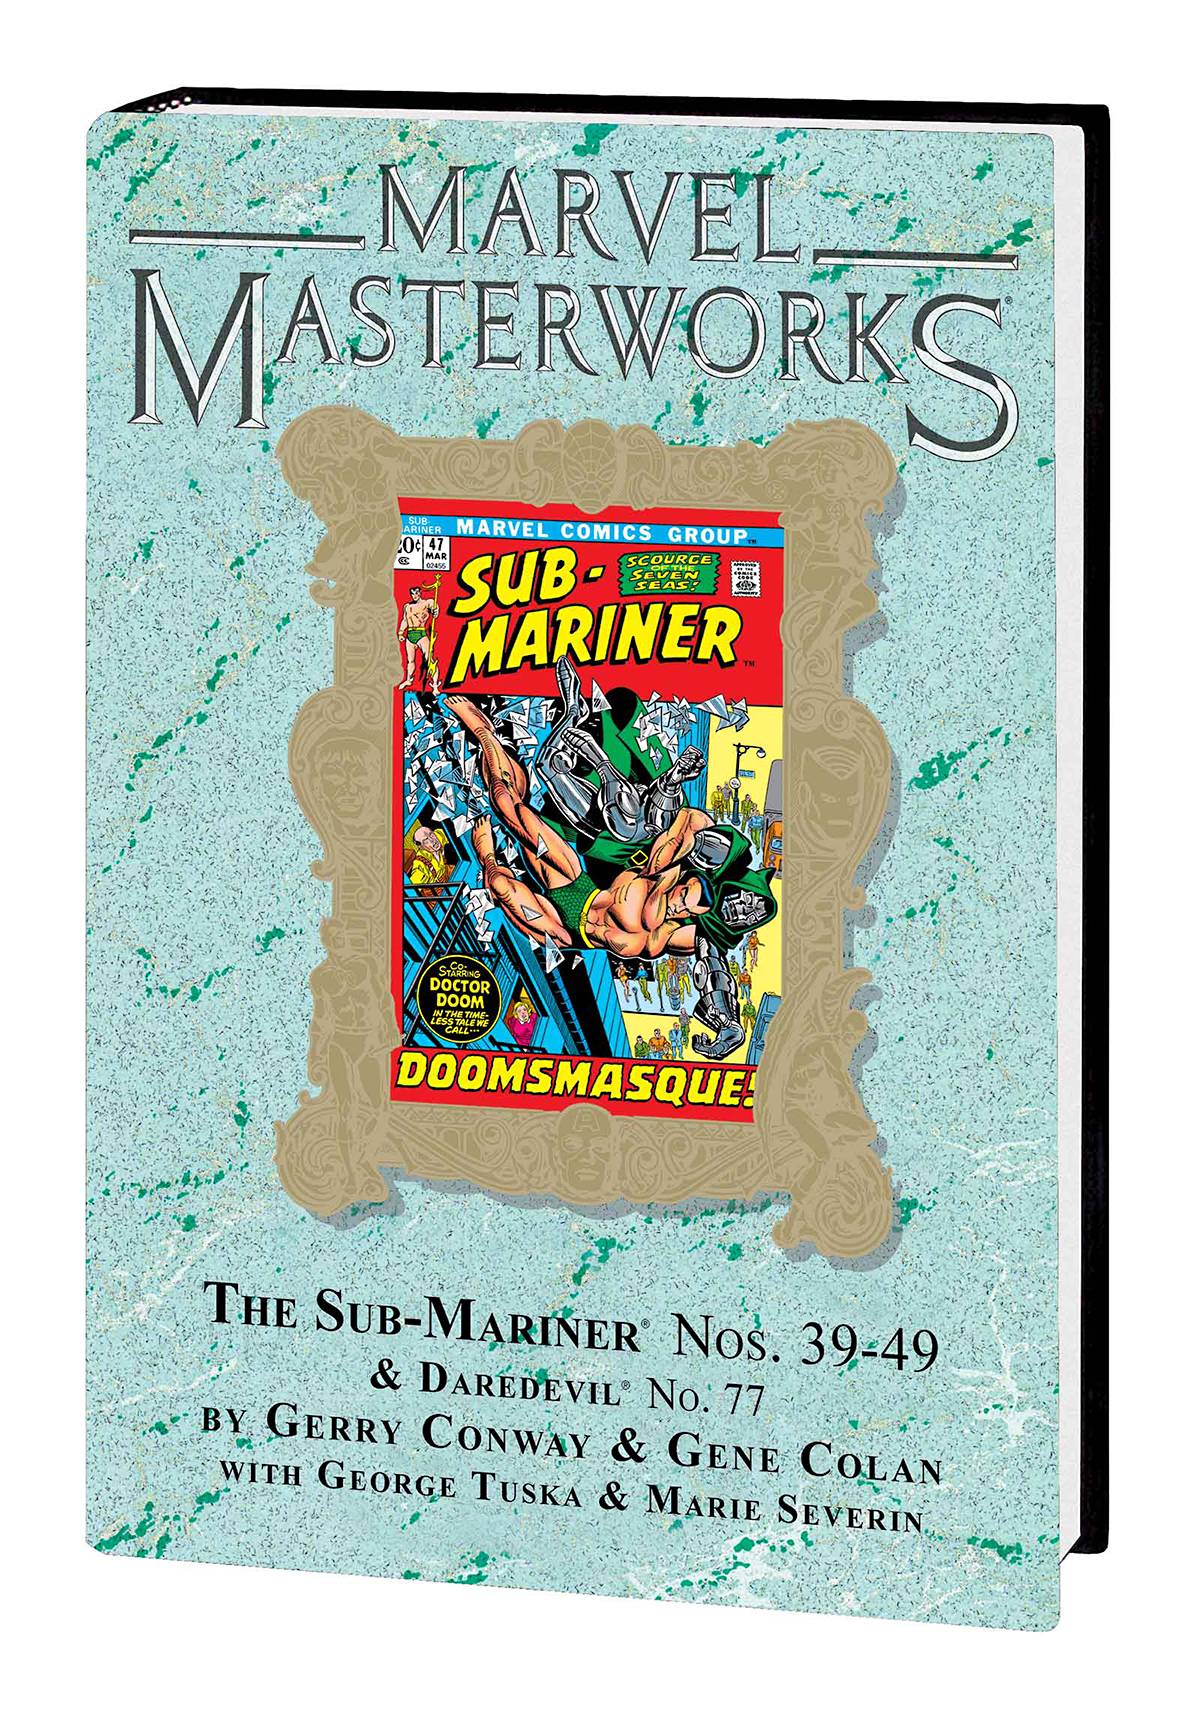 Marvel Masterworks Sub-Mariner Hardcover Volume 6 Direct Market Edition Edition 215